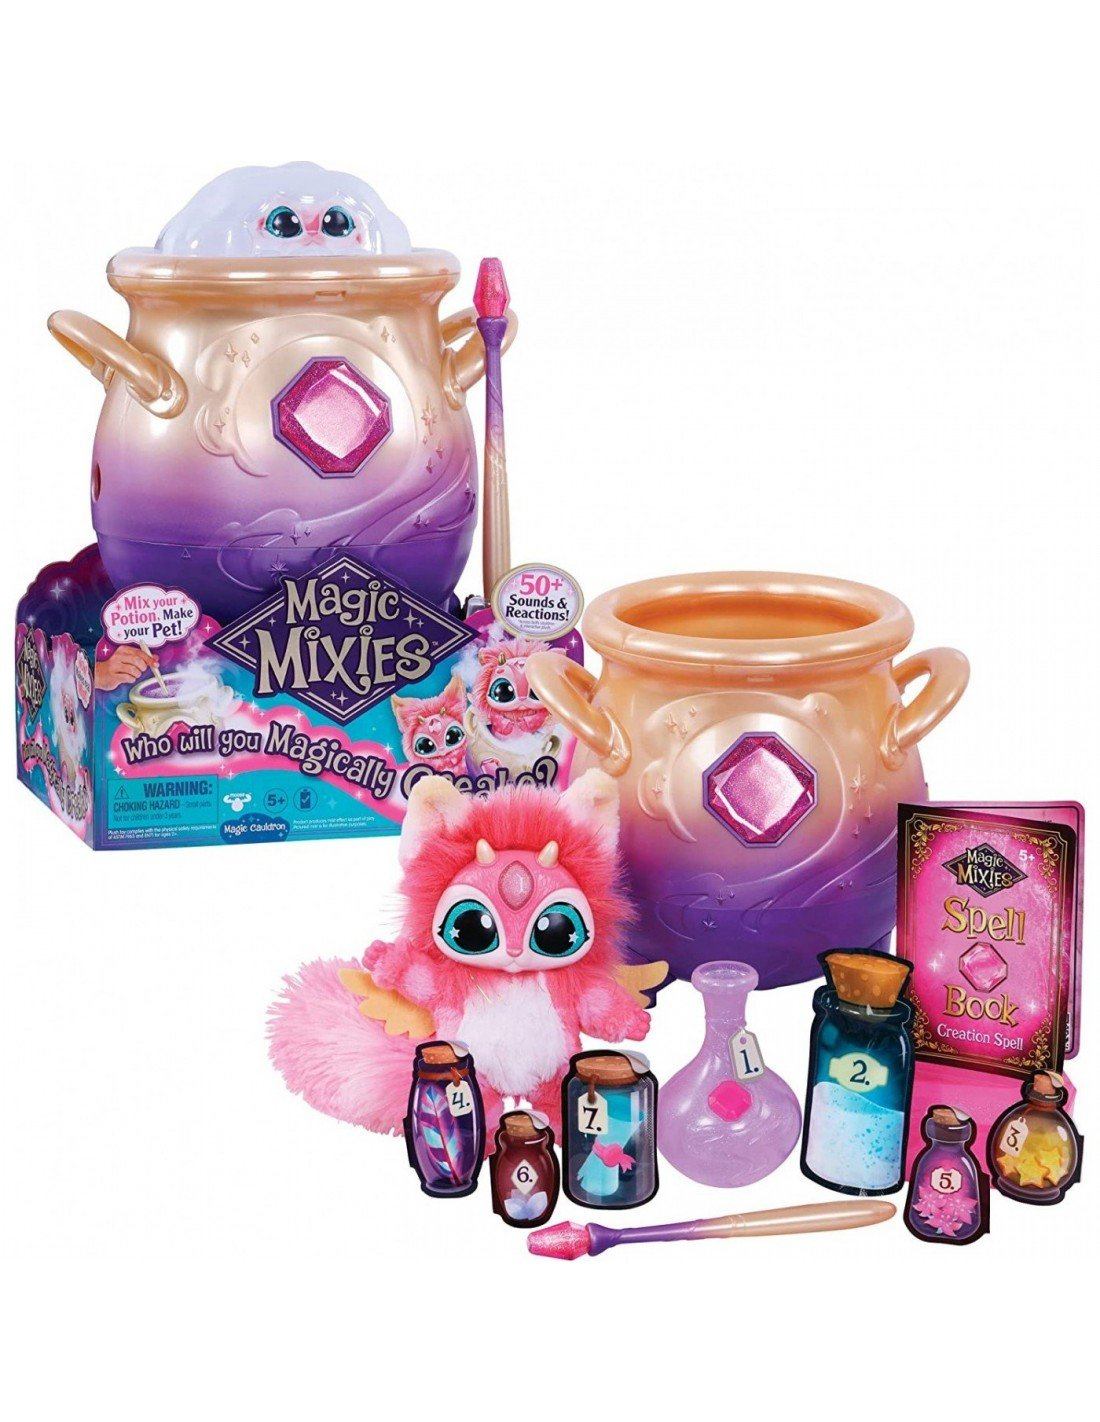 pentolone magico magic mixies rosa con cucciolo a sorpresa toysvaldichiana.it 